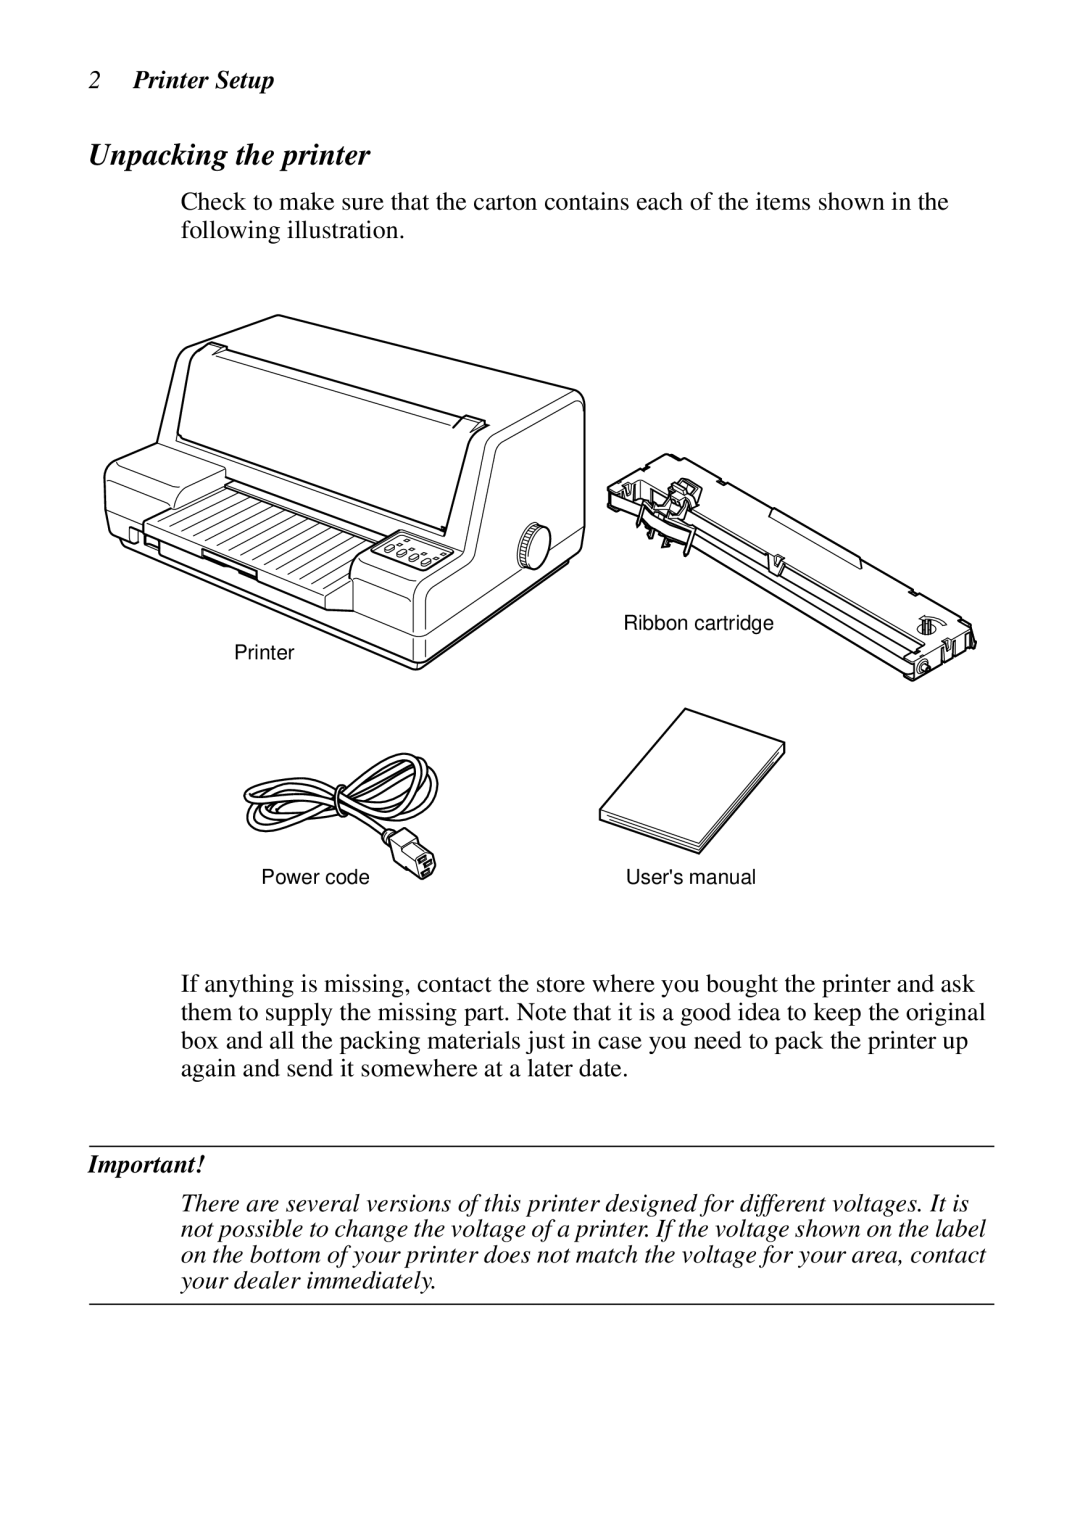 Star Micronics LC-8021 manual Unpacking the printer, Printer Setup 